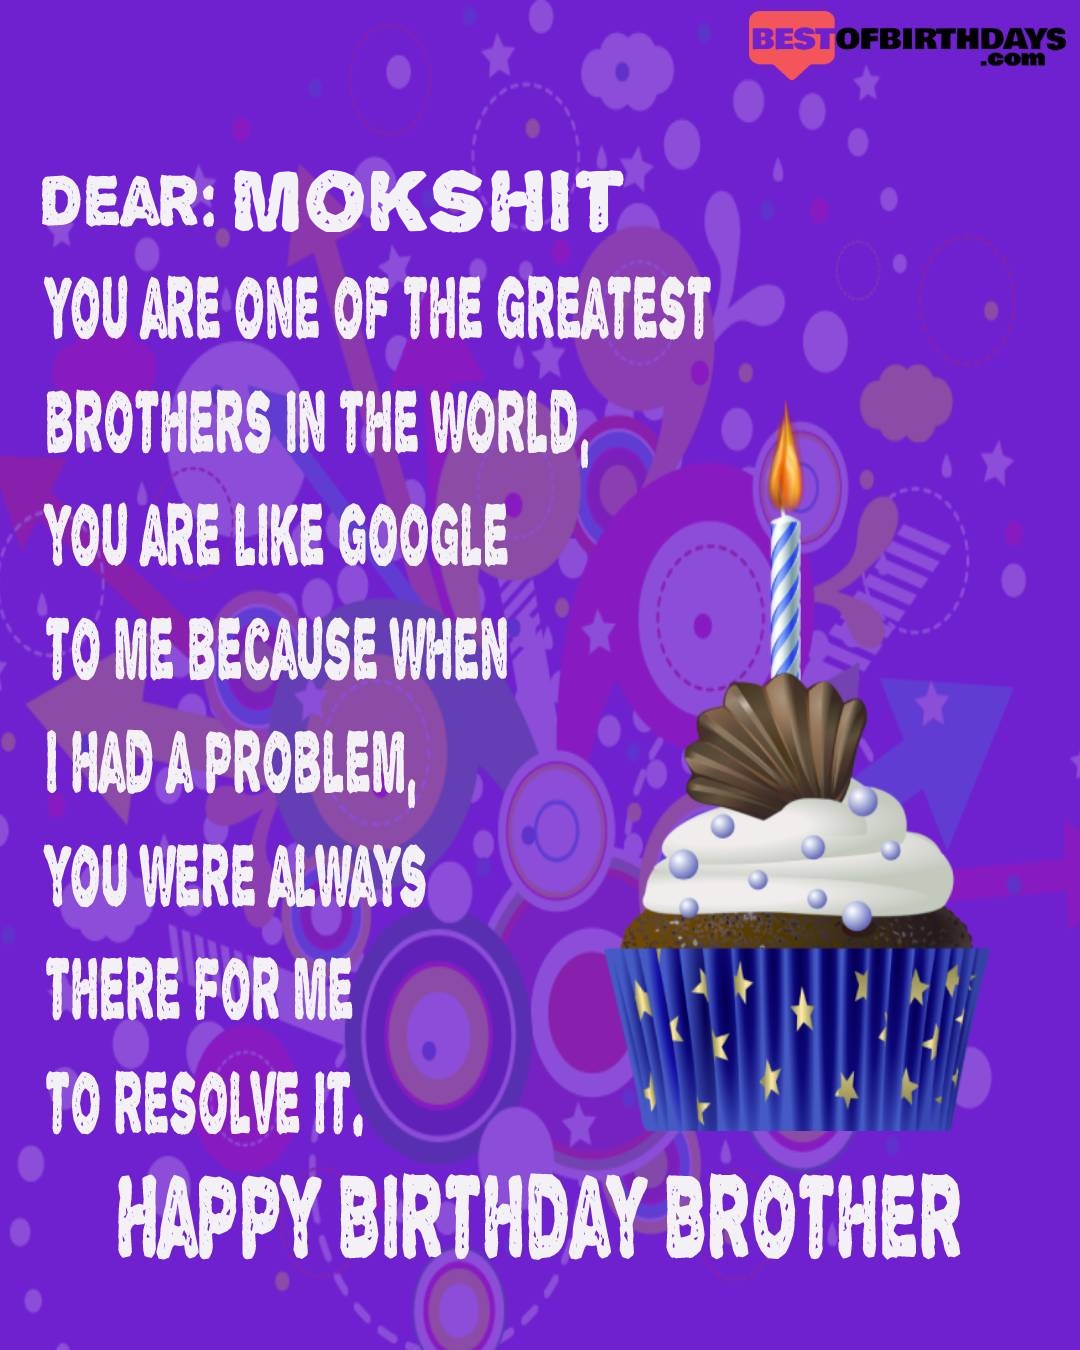 Happy birthday mokshit bhai brother bro